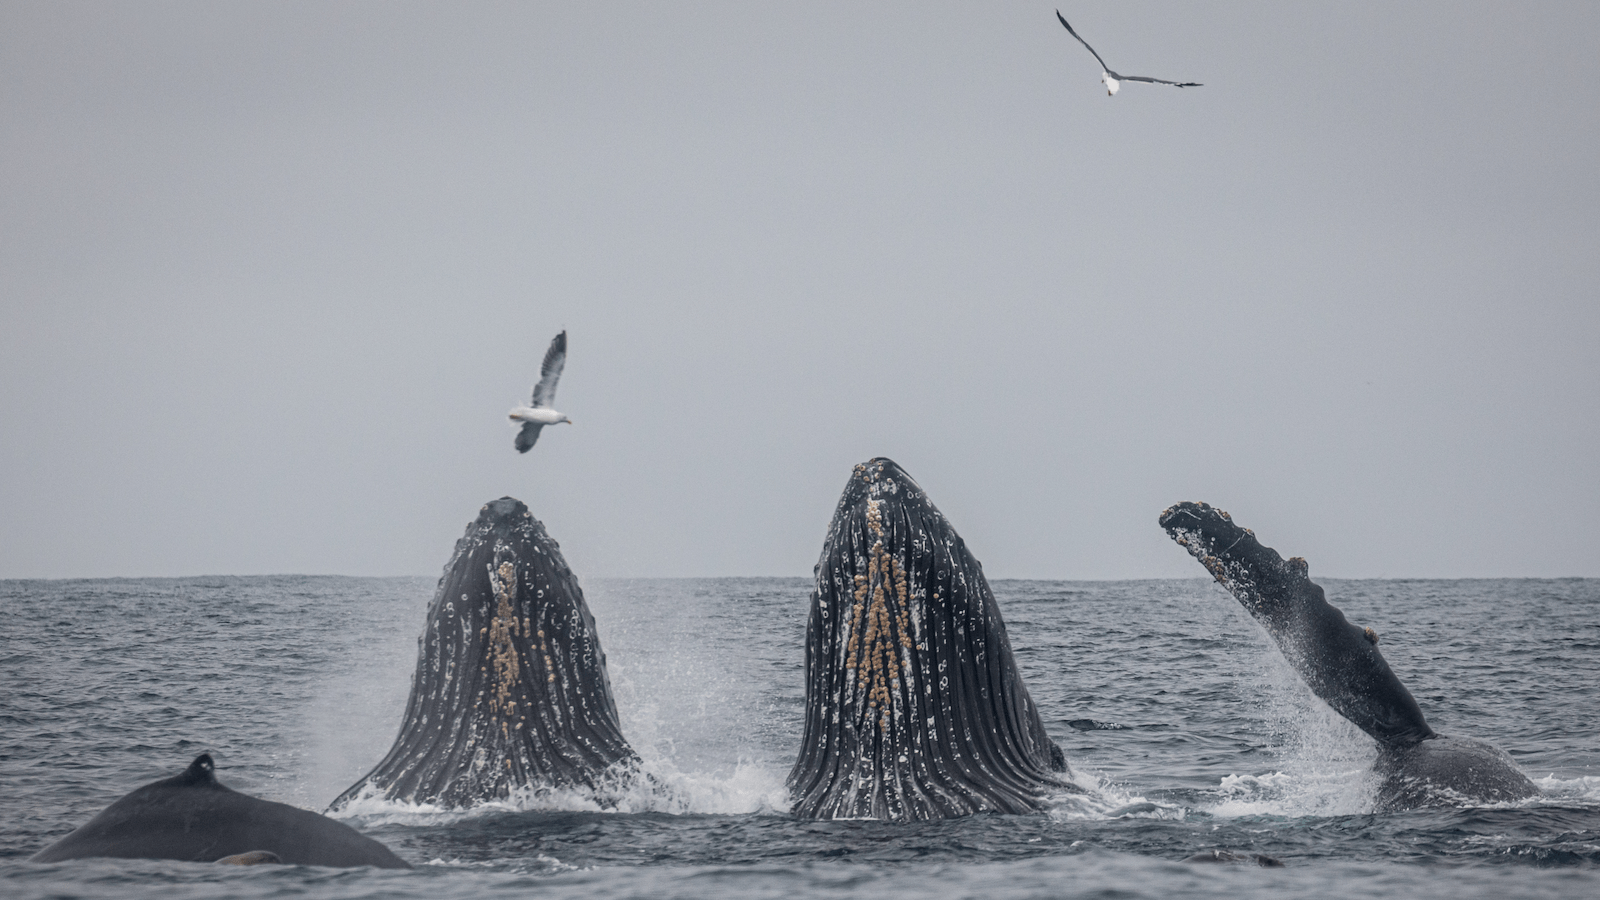 do_whale watching_humbacks _800x450_Daniel Bianchetta _ Monterey Bay Whale Watch